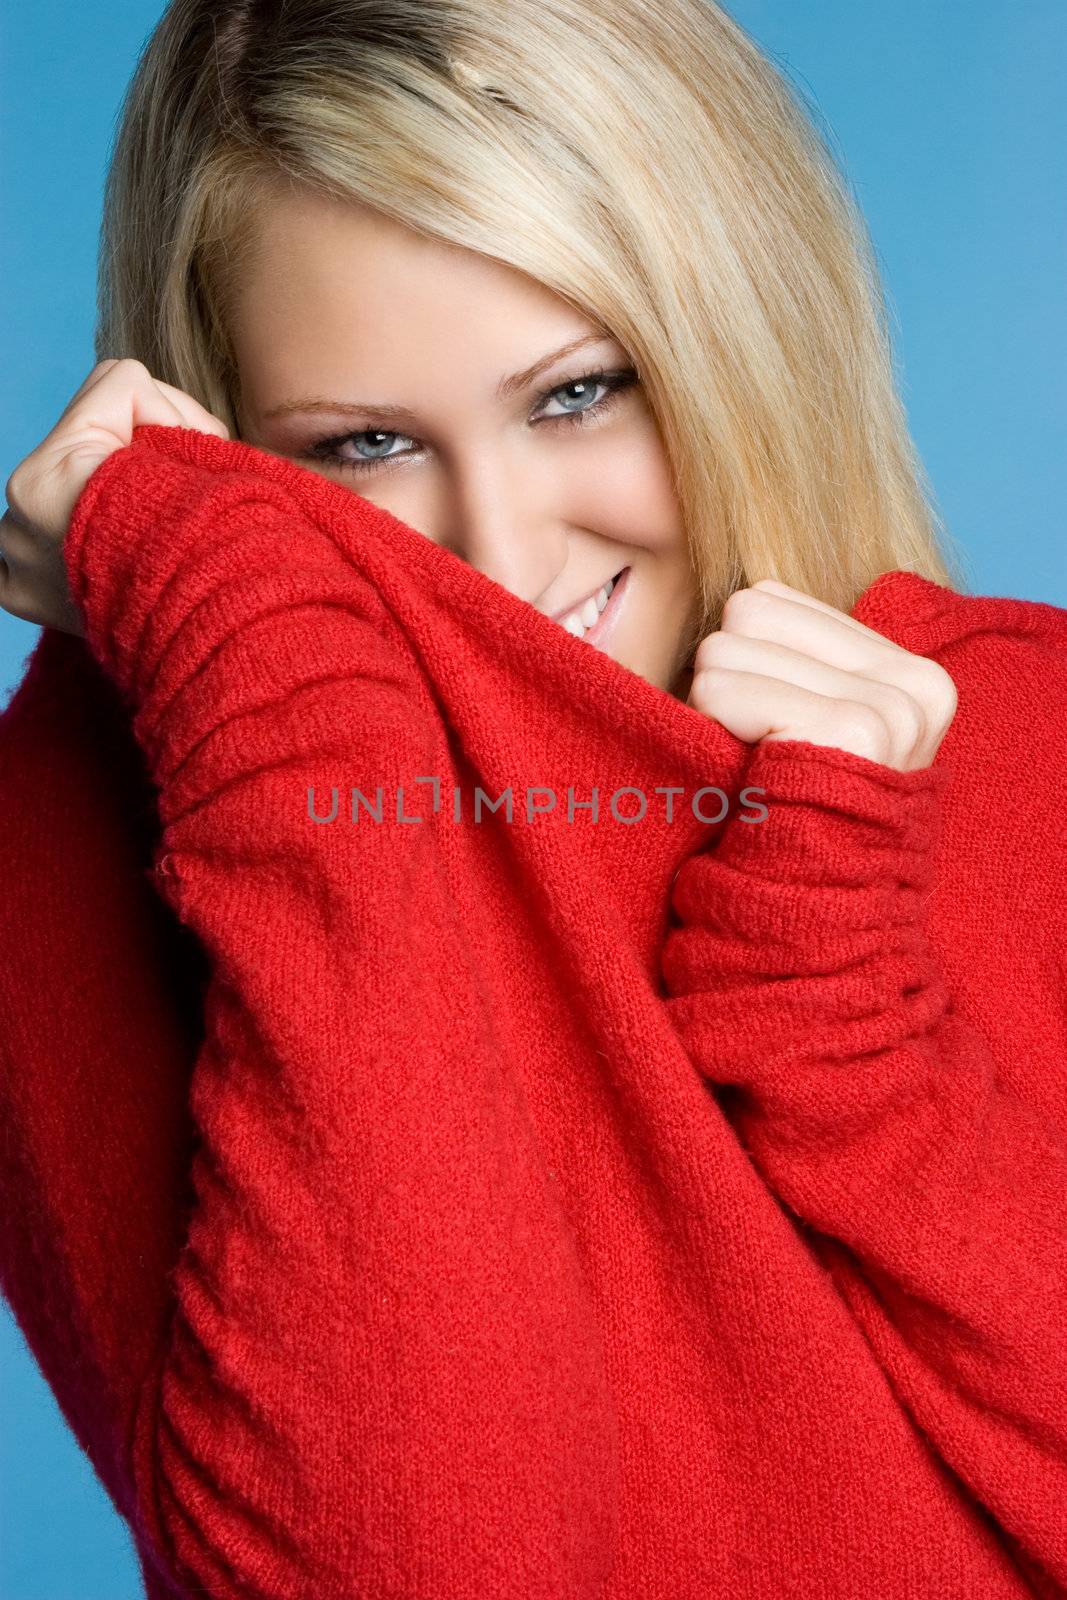 Beautiful woman wearing red sweater